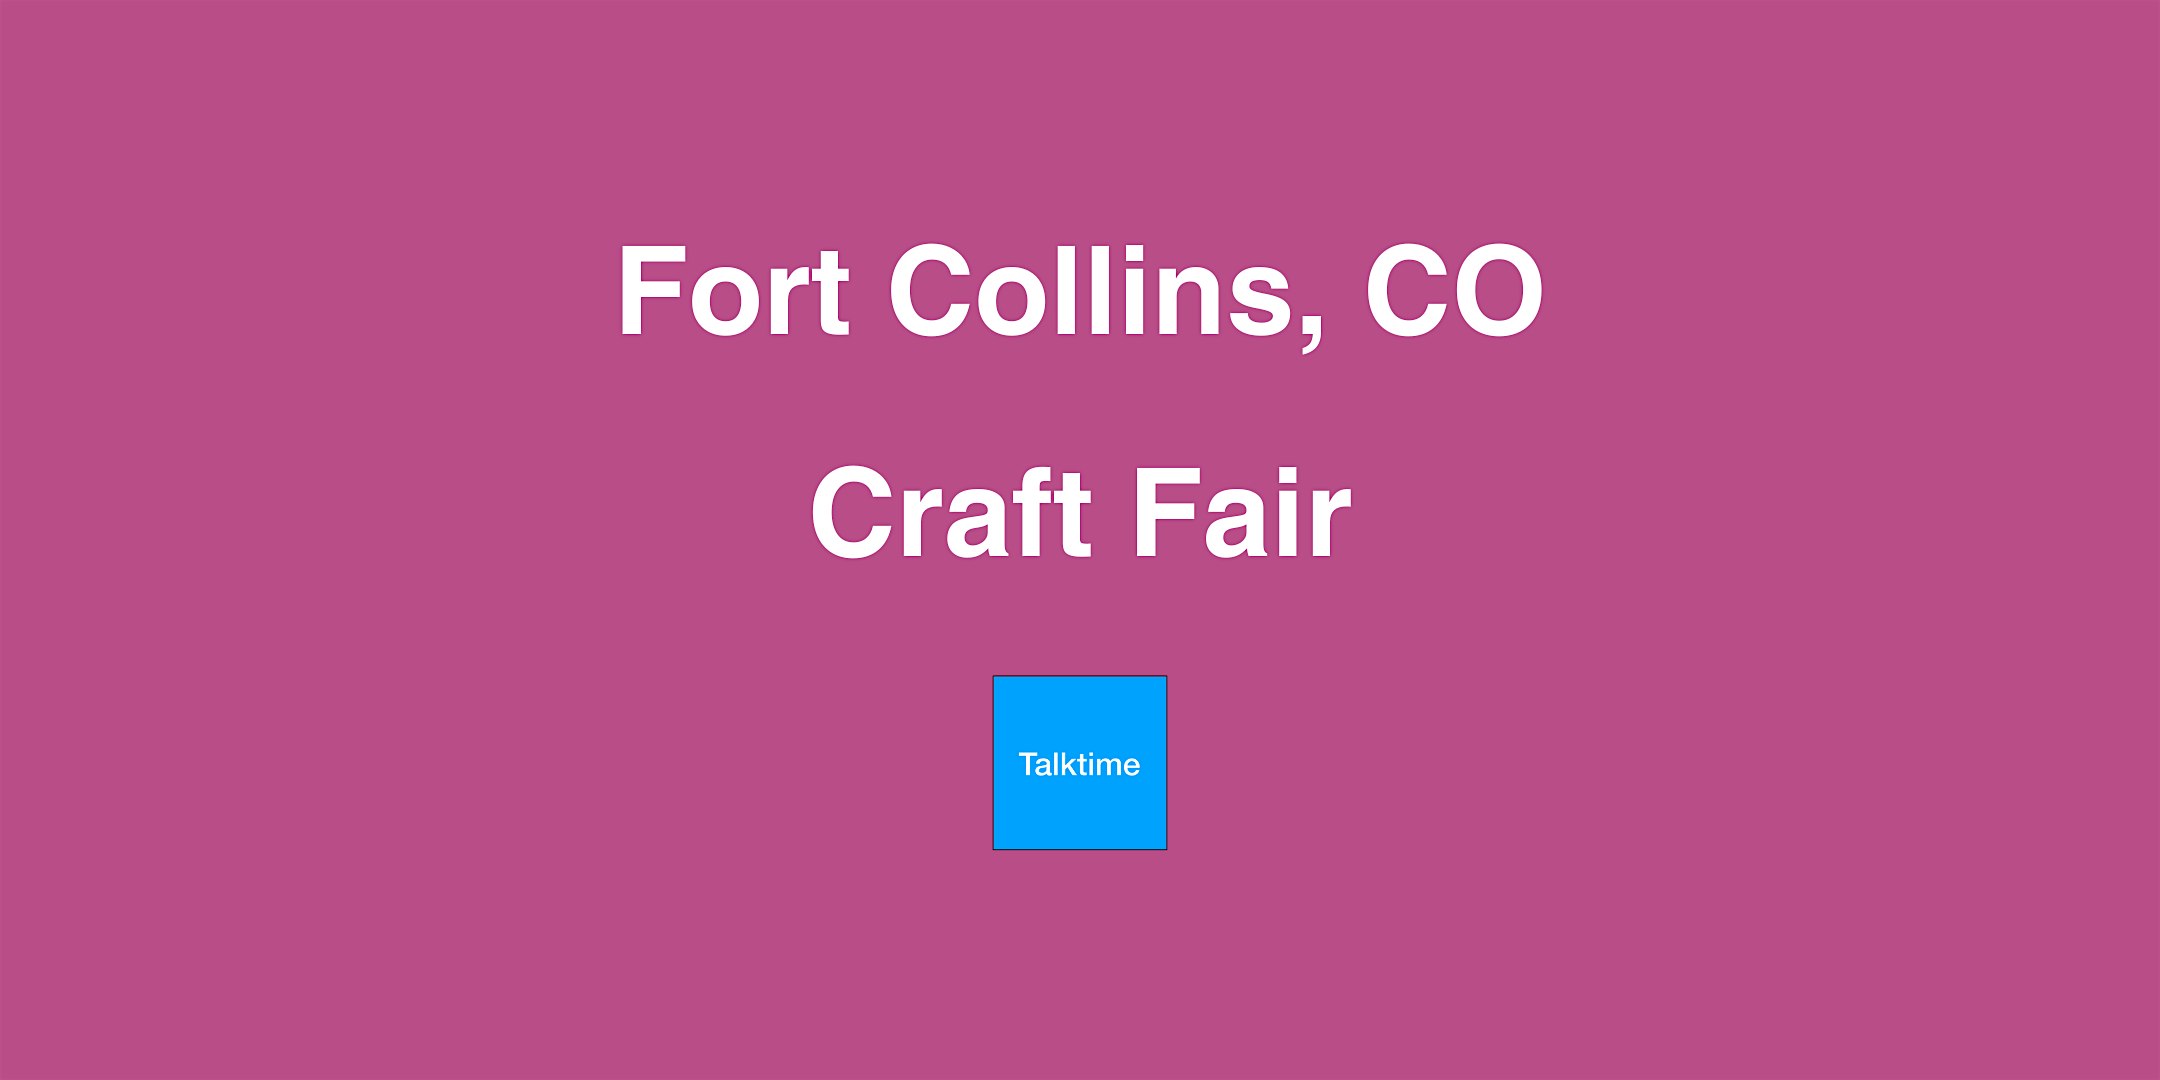 Craft Fair - Fort Collins